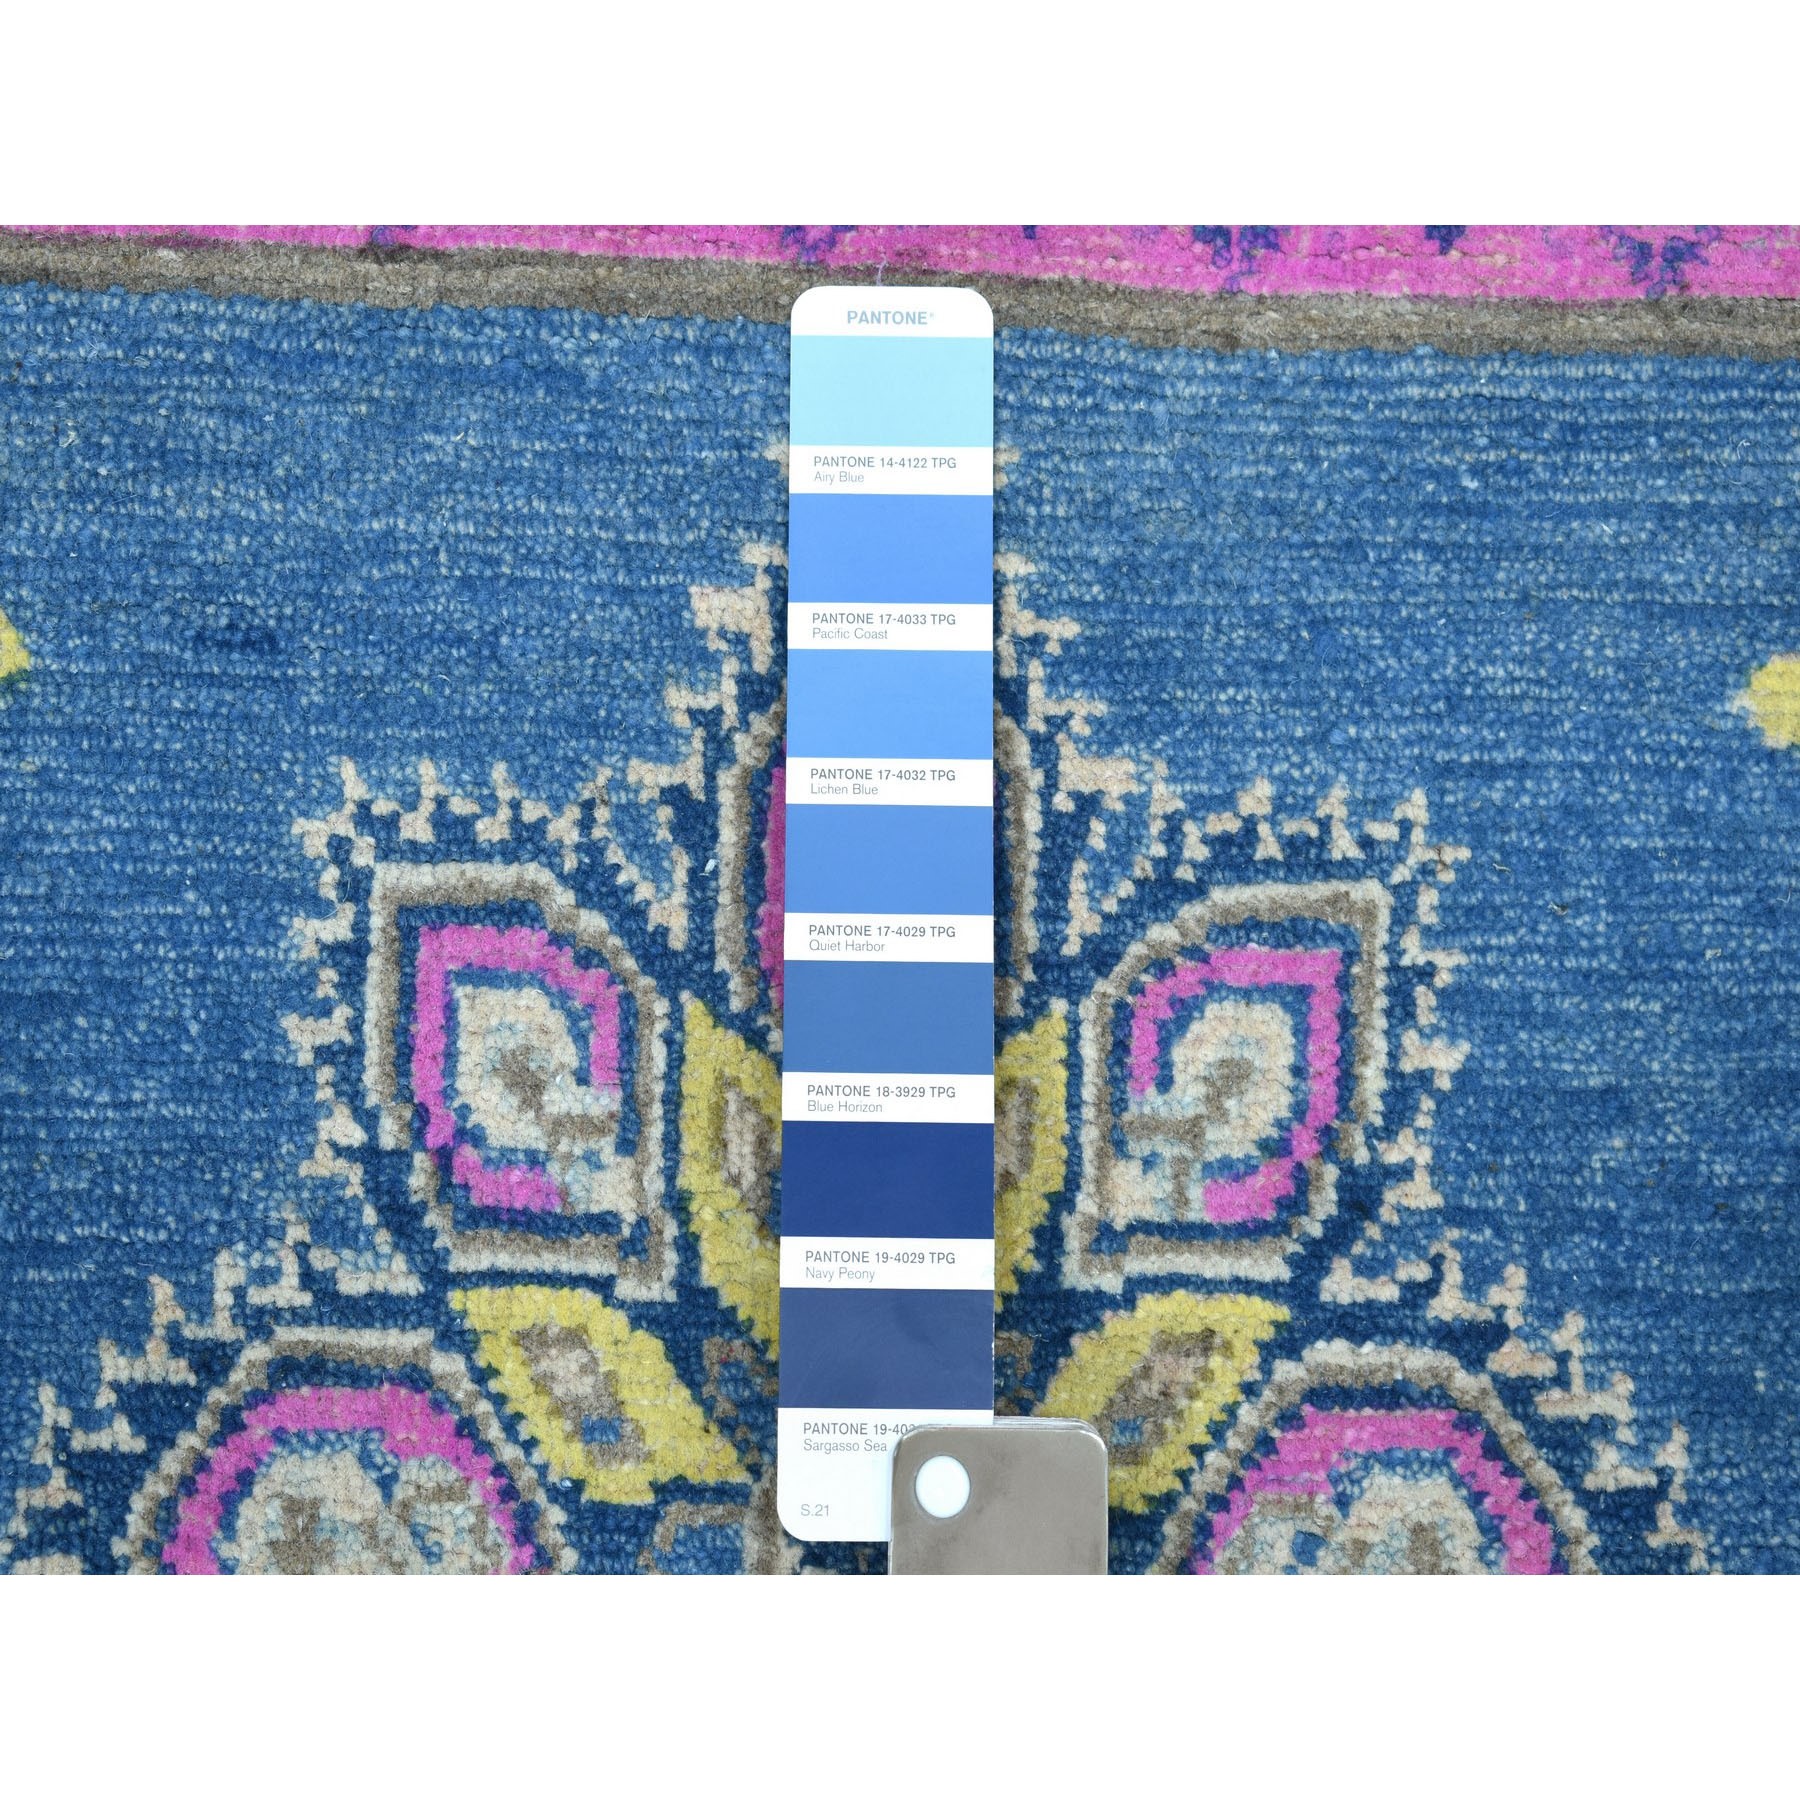 4'x6'4" Colorful Blue Fusion Kazak Pure Wool Hand Woven Oriental Rug 